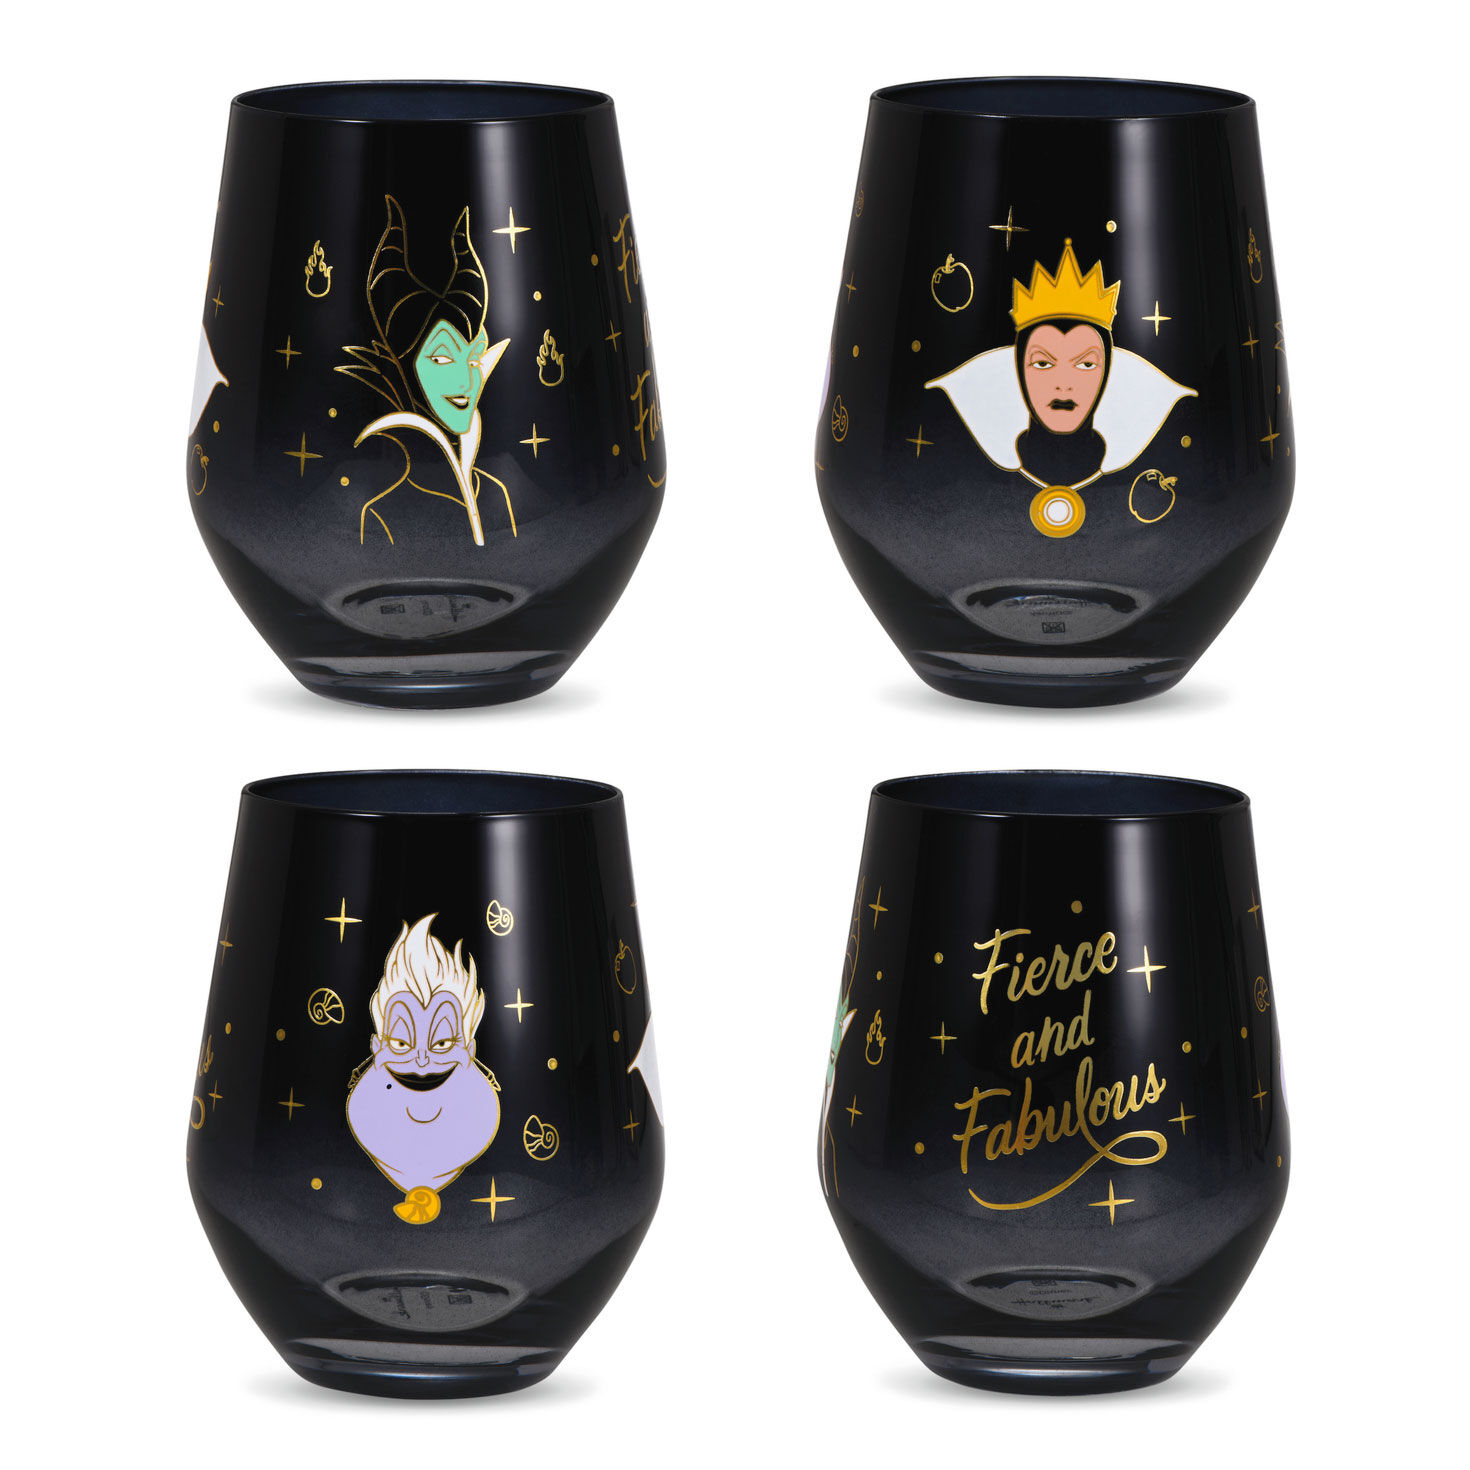 Disney Classics Stemless Wine Glasses, Set of 2